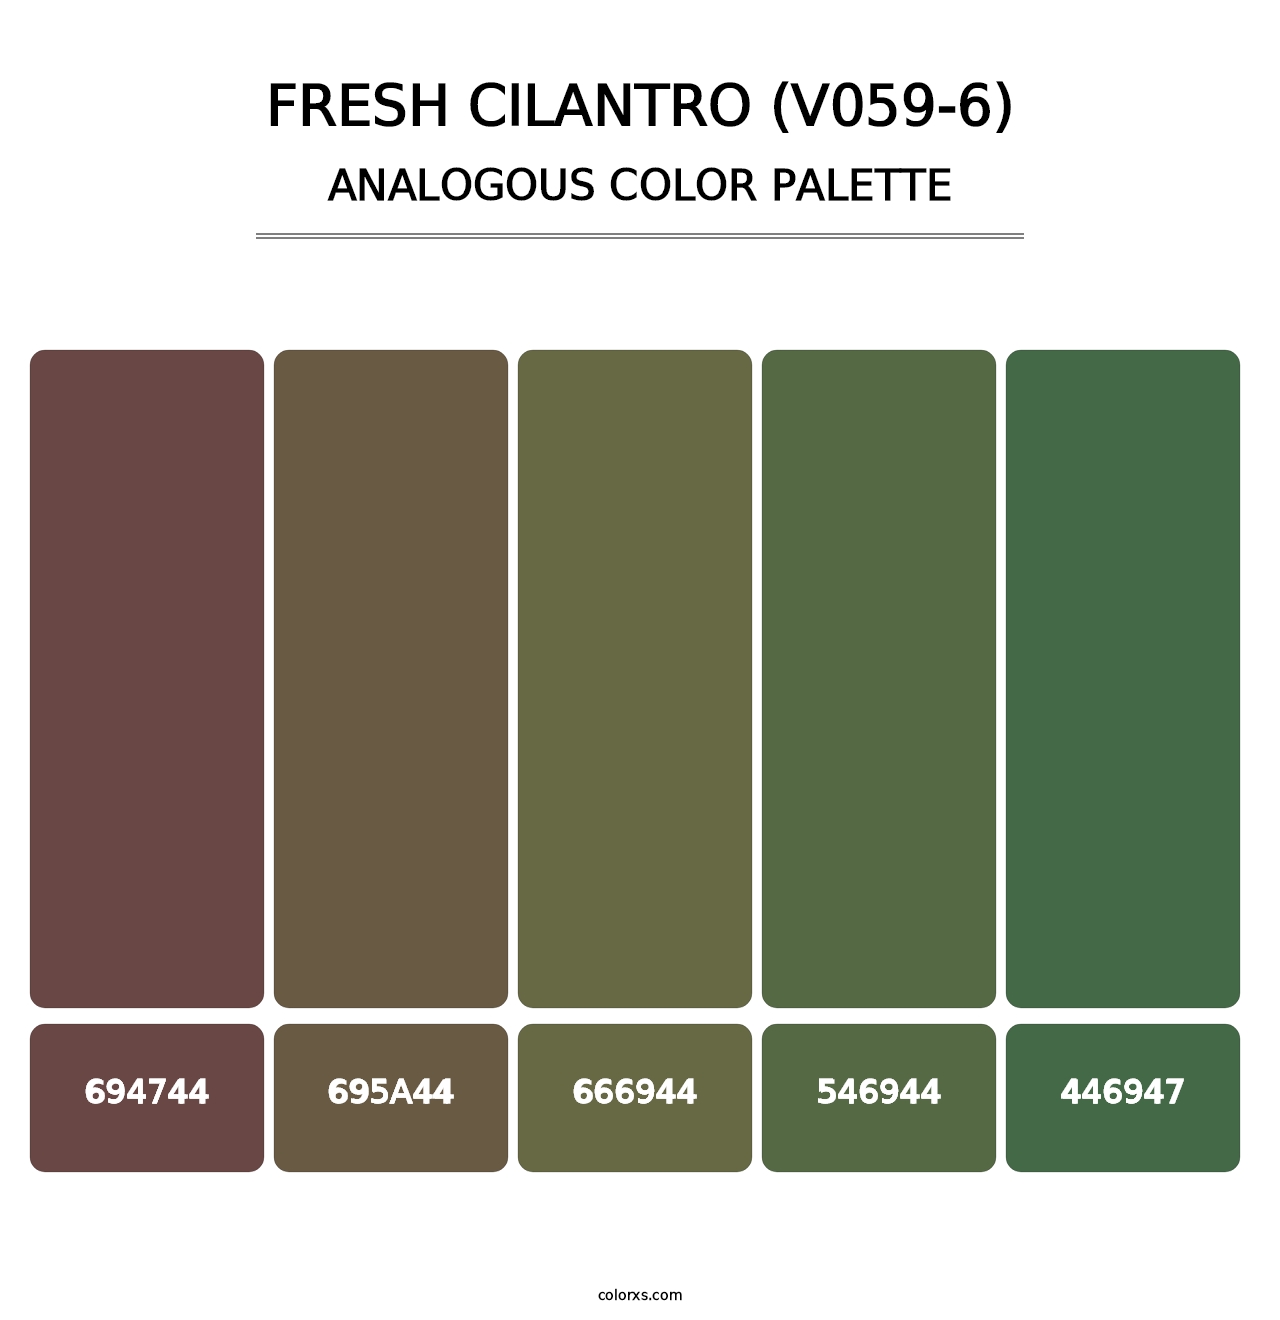 Fresh Cilantro (V059-6) - Analogous Color Palette